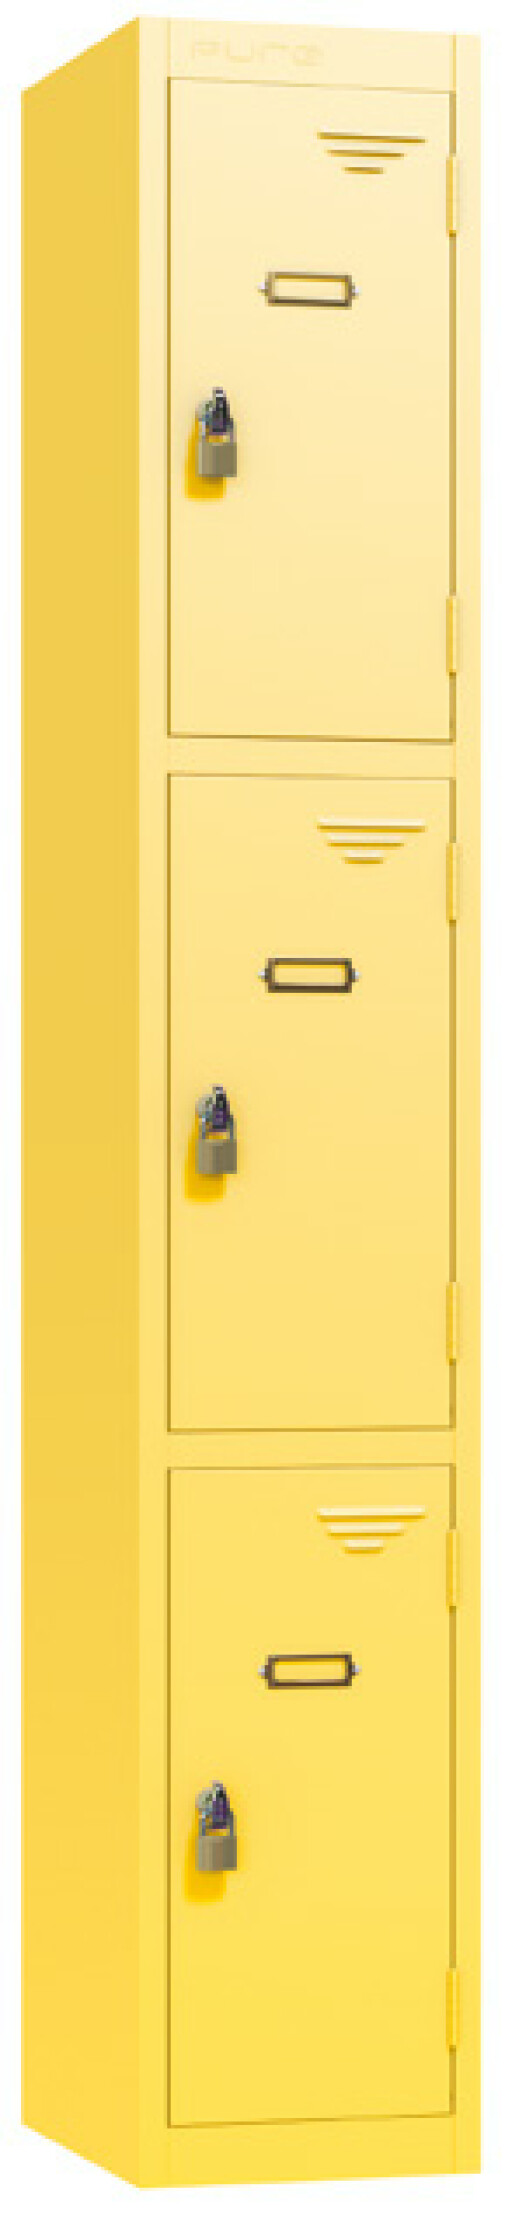 retro lockers .jpg